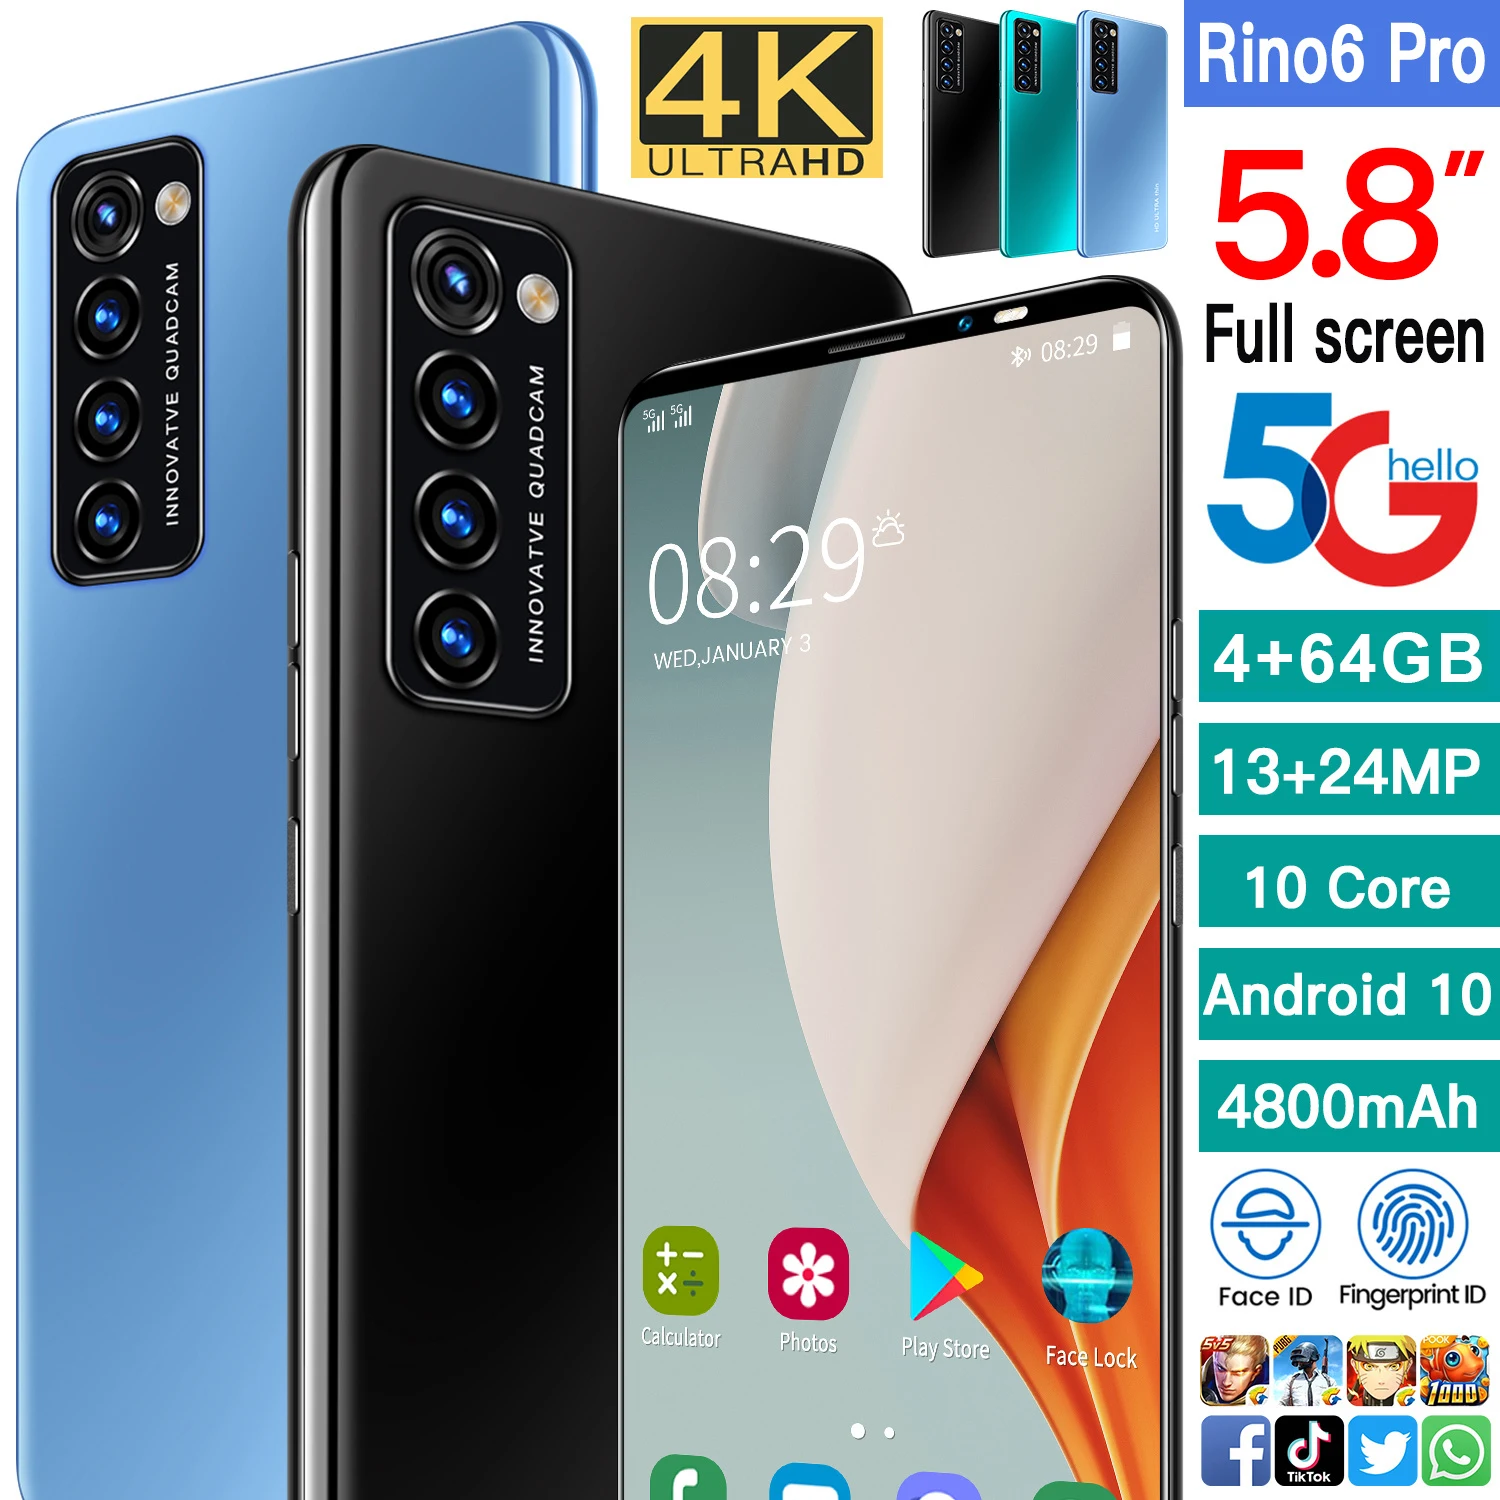 

Hot Sale Rino6 Pro 5.8 Inch Smartphone 4G 128GB Andriod 10 Core 4800mAh Mobile Phone Face Fingerprint ID Dual SIM 13+24MP Newest